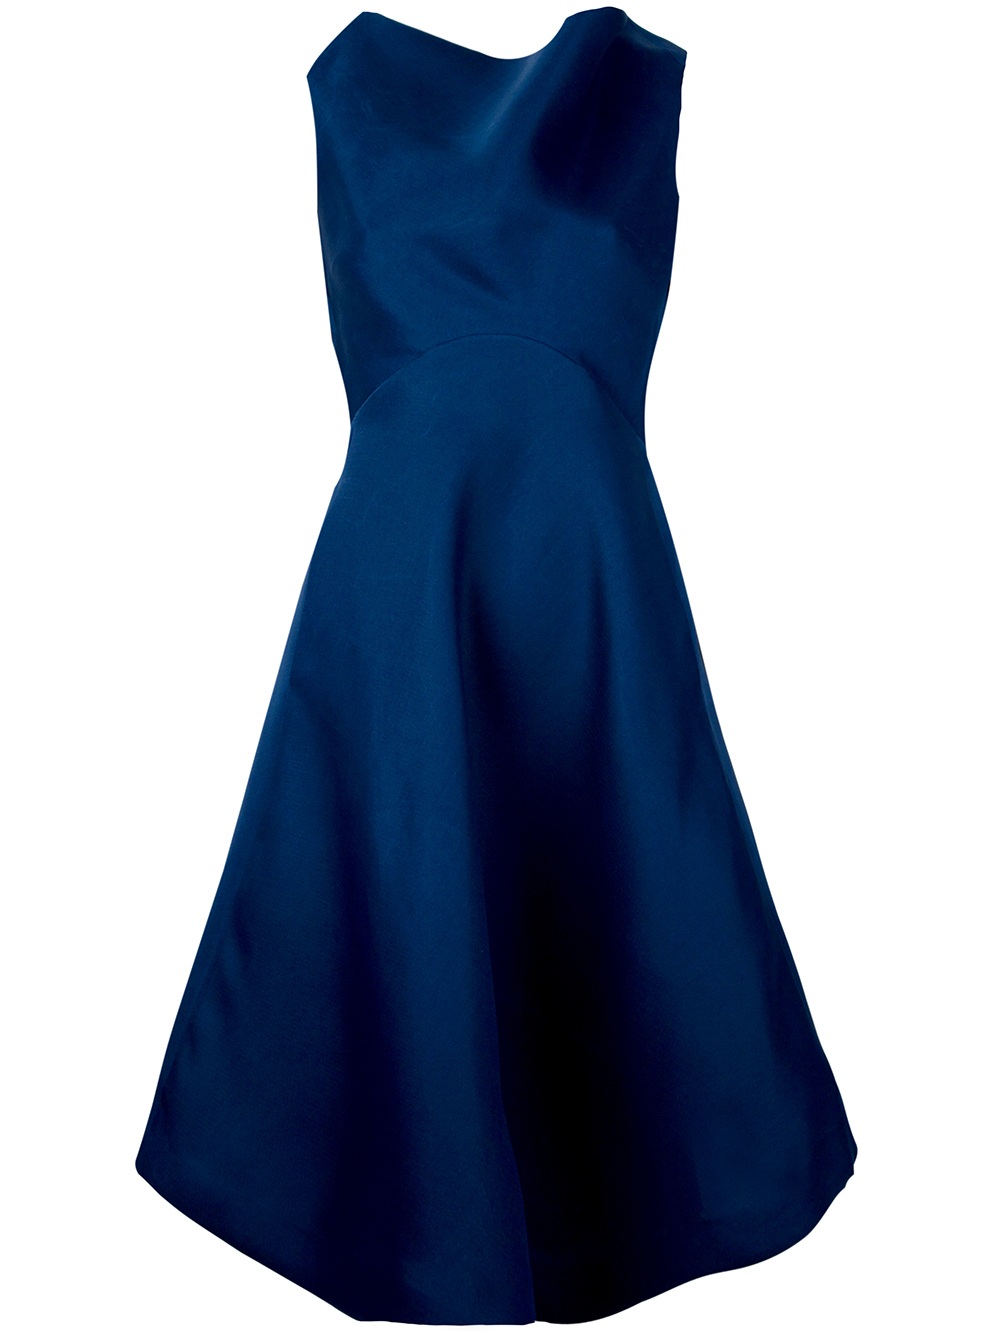 Lyst - Balenciaga Sleeveless Dress in Blue